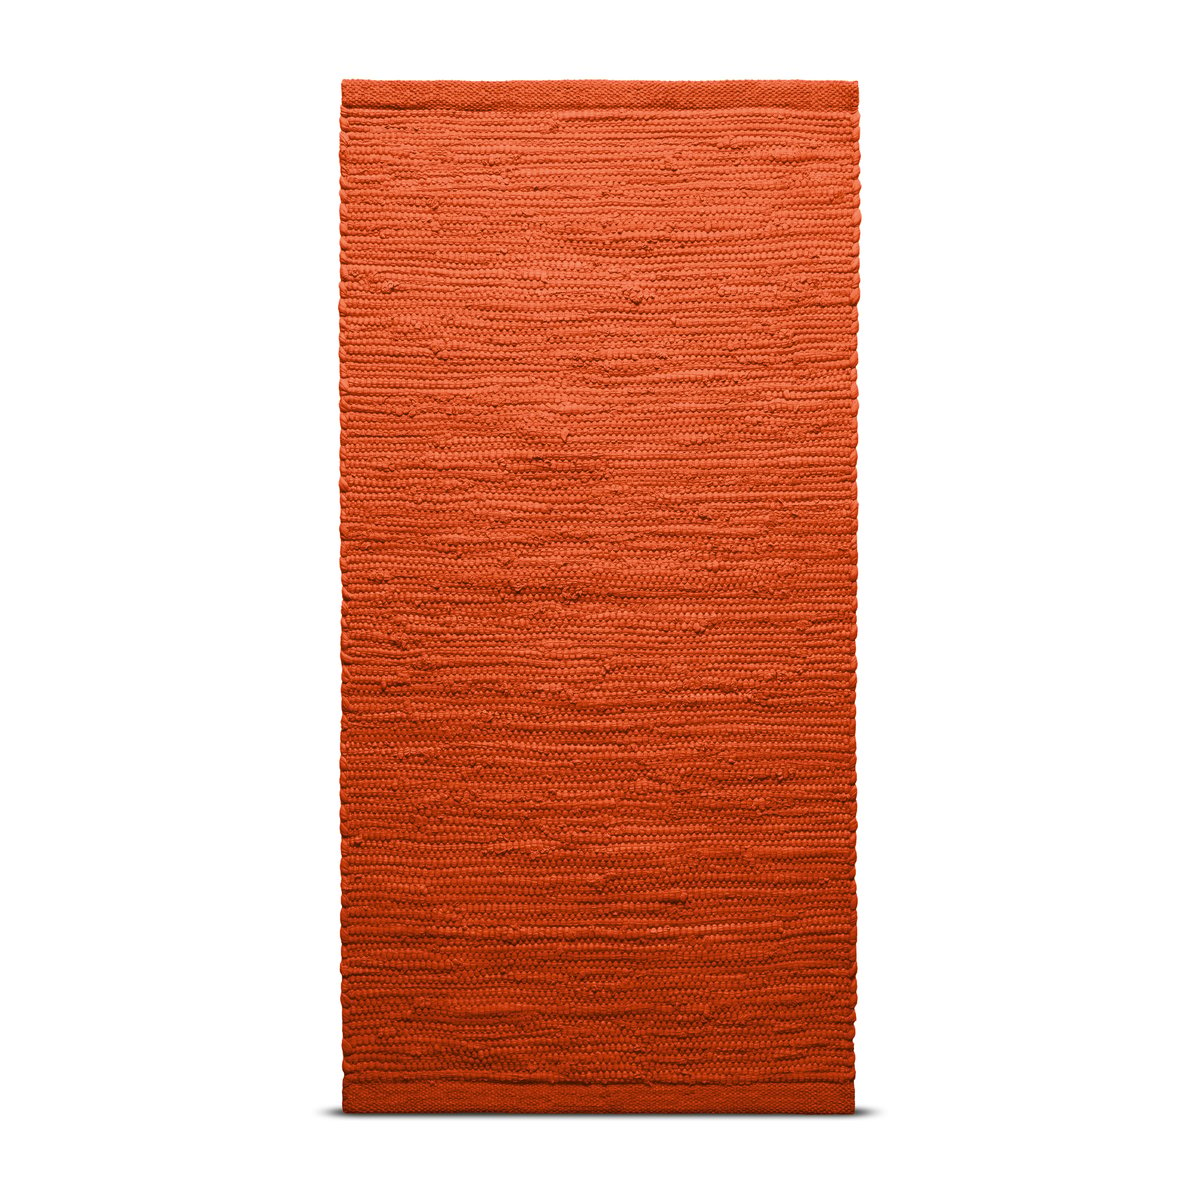 Rug Solid Cotton vloerkleed 140 x 200 cm. Solar orange (oranje)